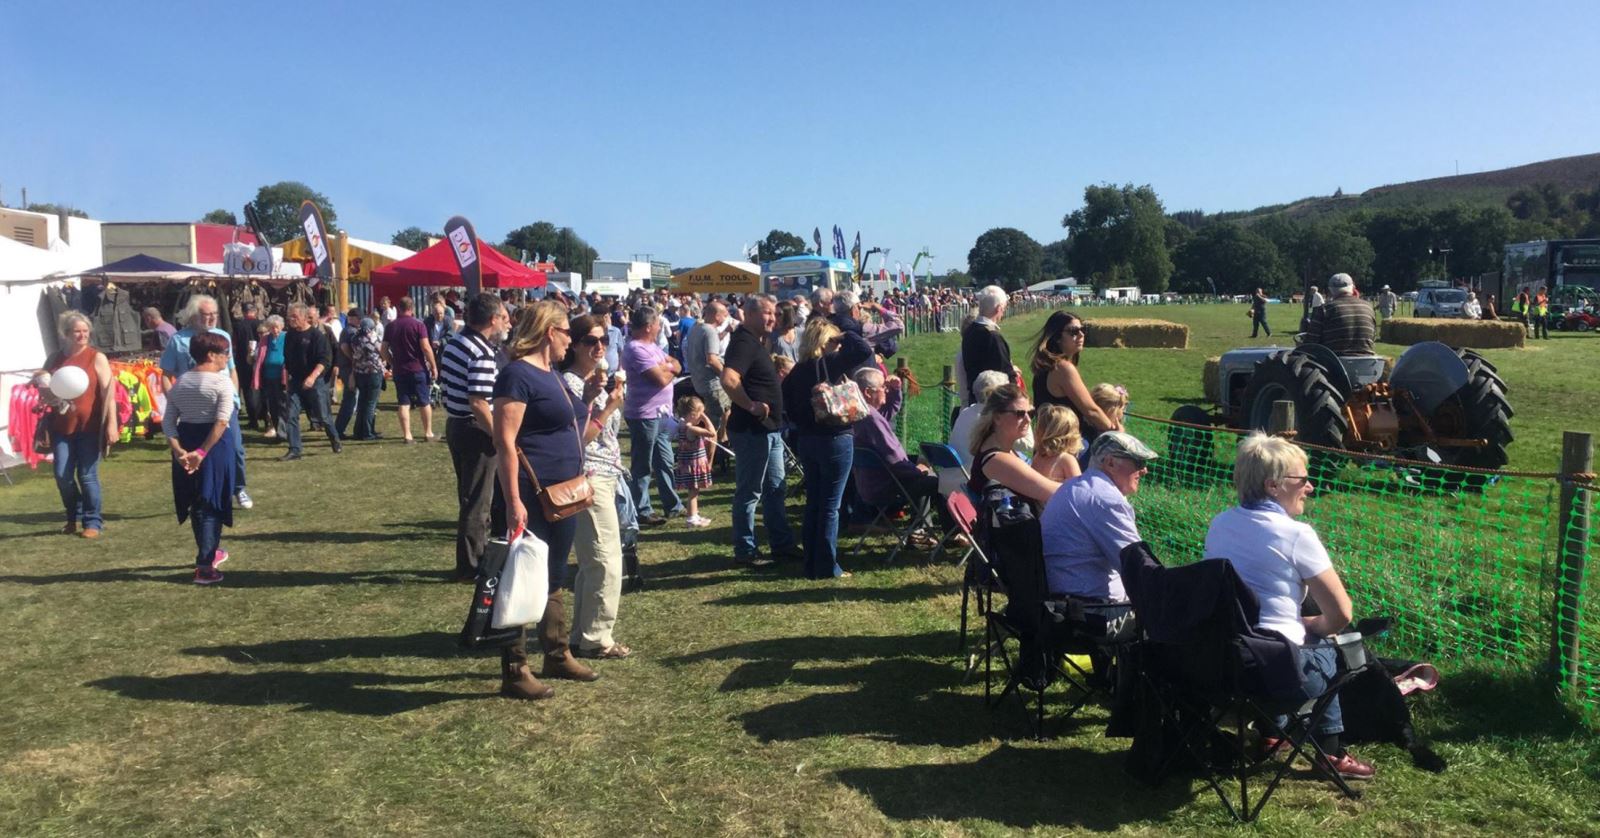 crowds enjoying the annual Wolsingham Show in County Durham